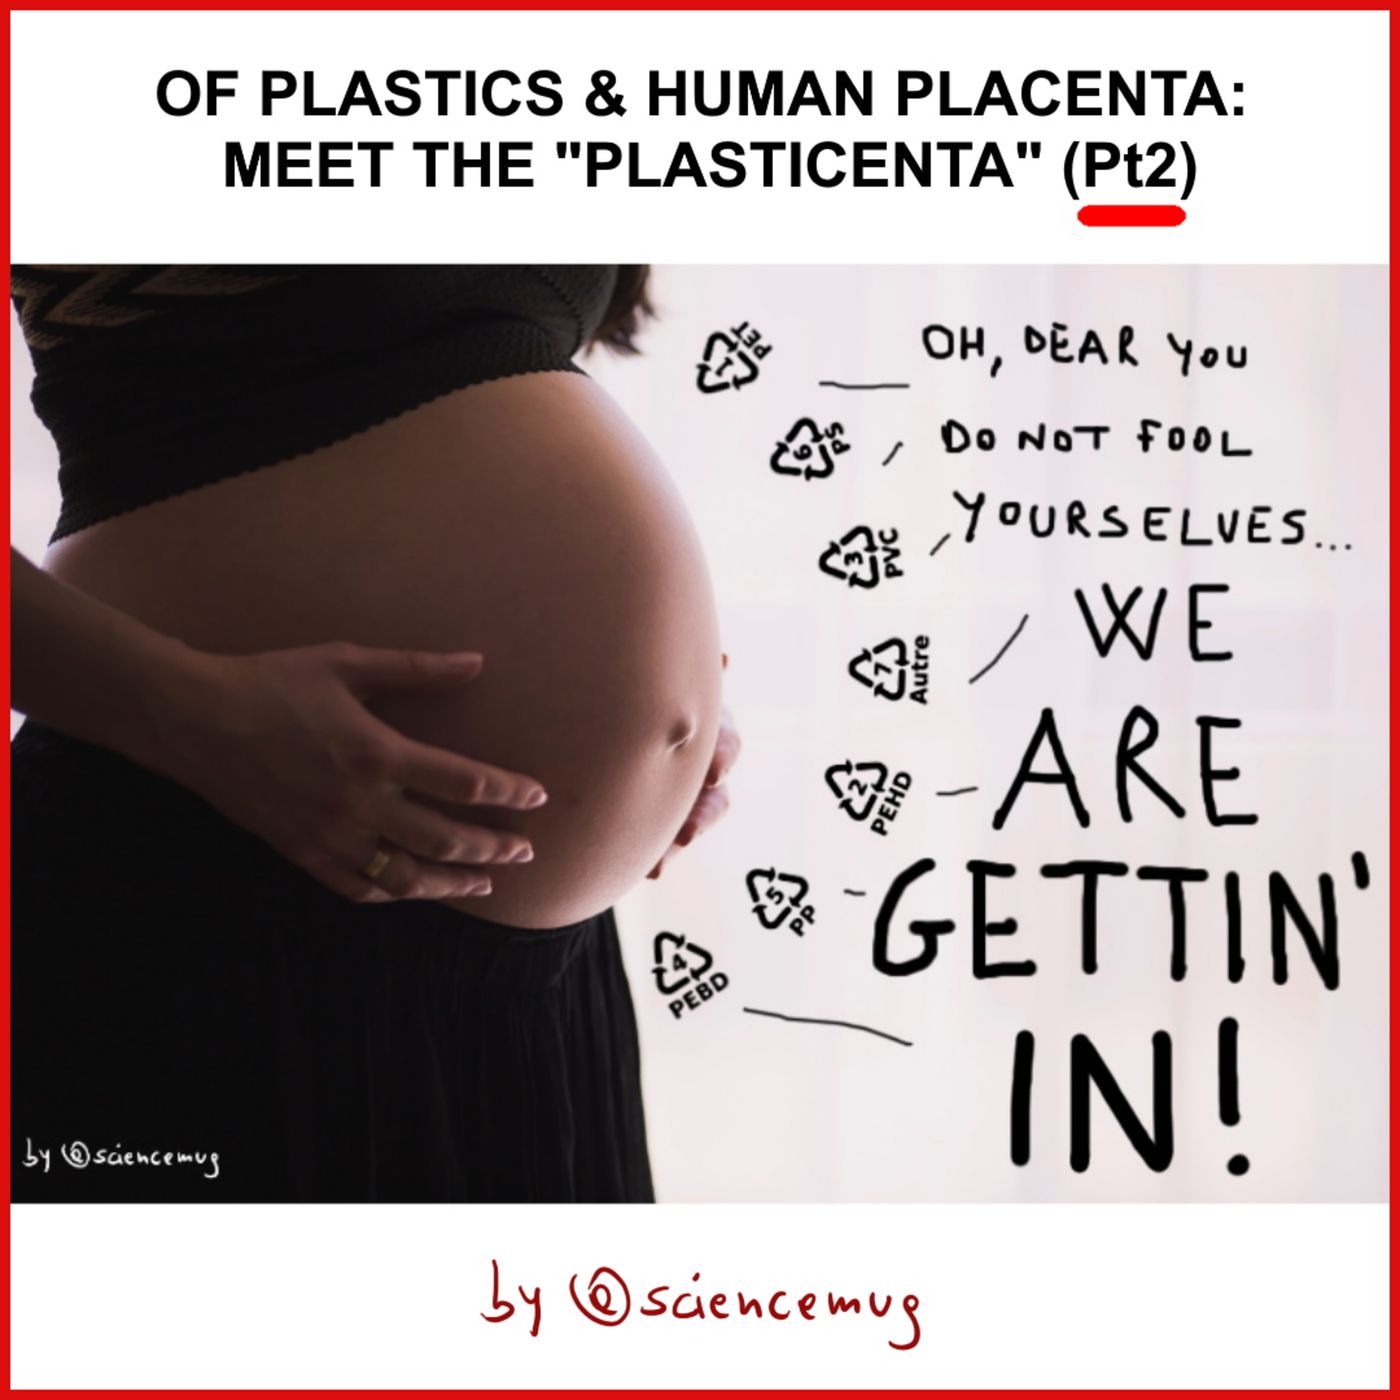 Of plastics & human placenta: meet the "plasticenta" (Pt2)